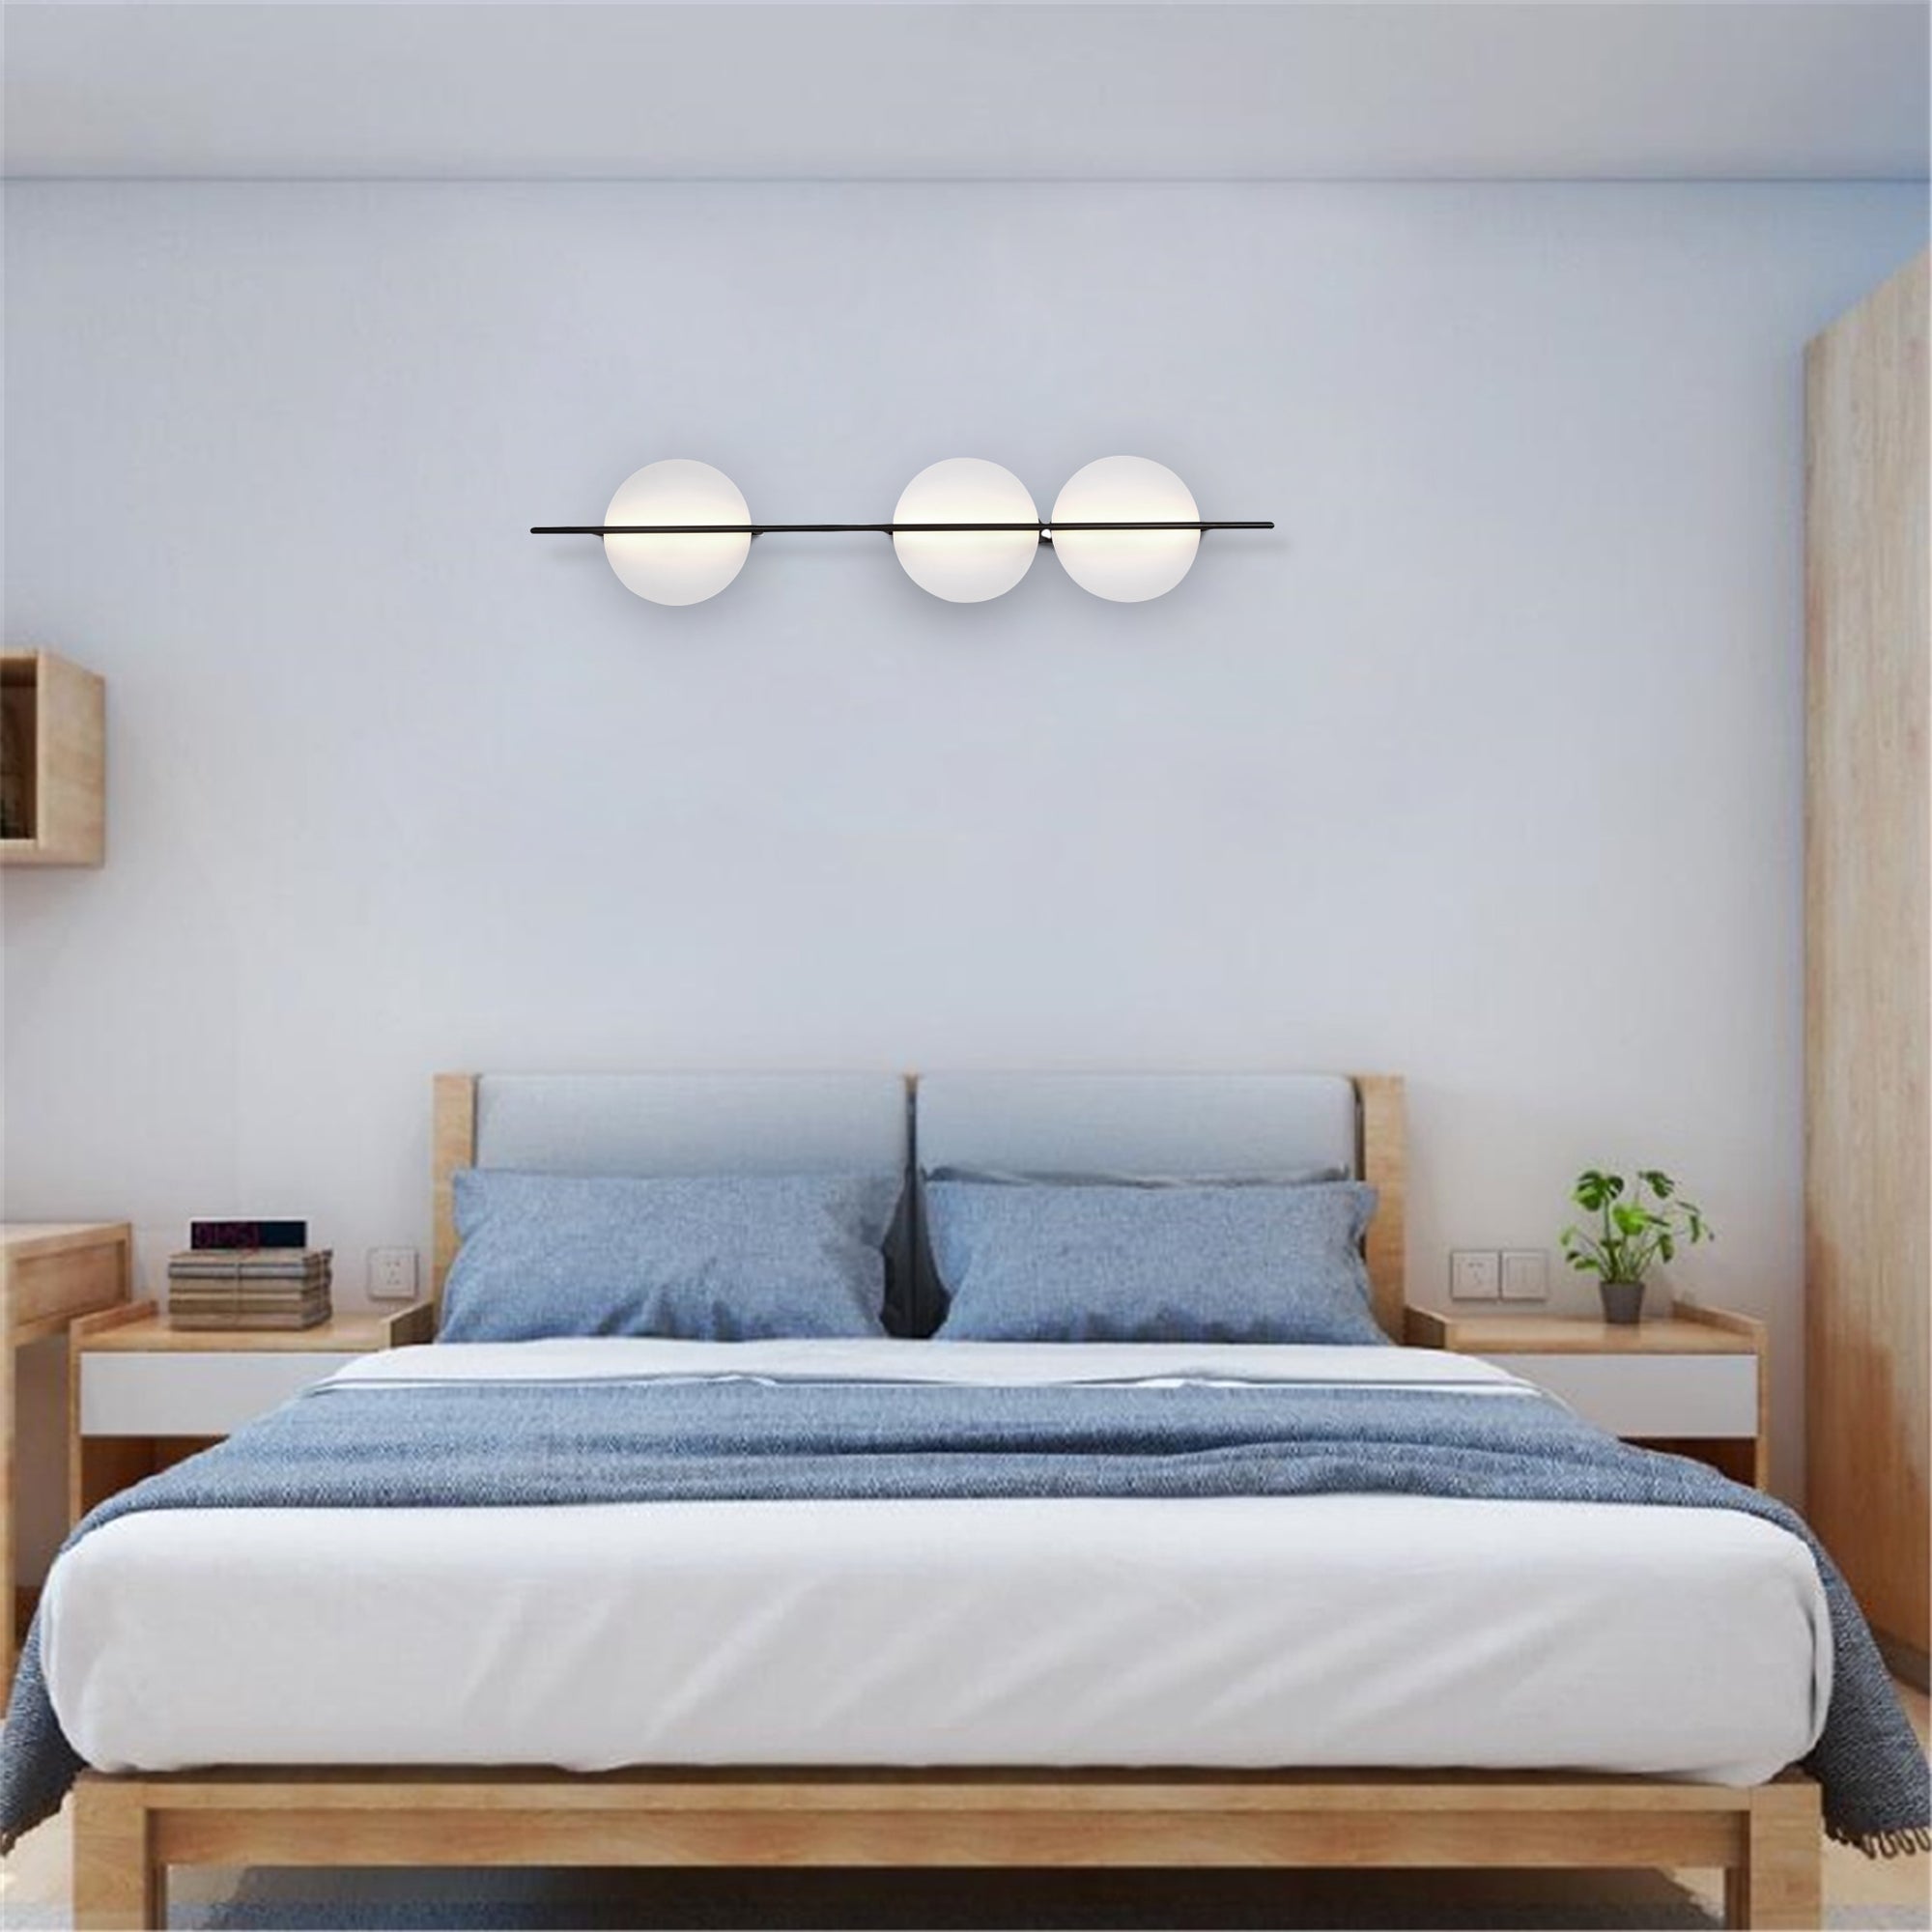 Bedroom Lights and bedroom lighting ideas with bedroom wall lights